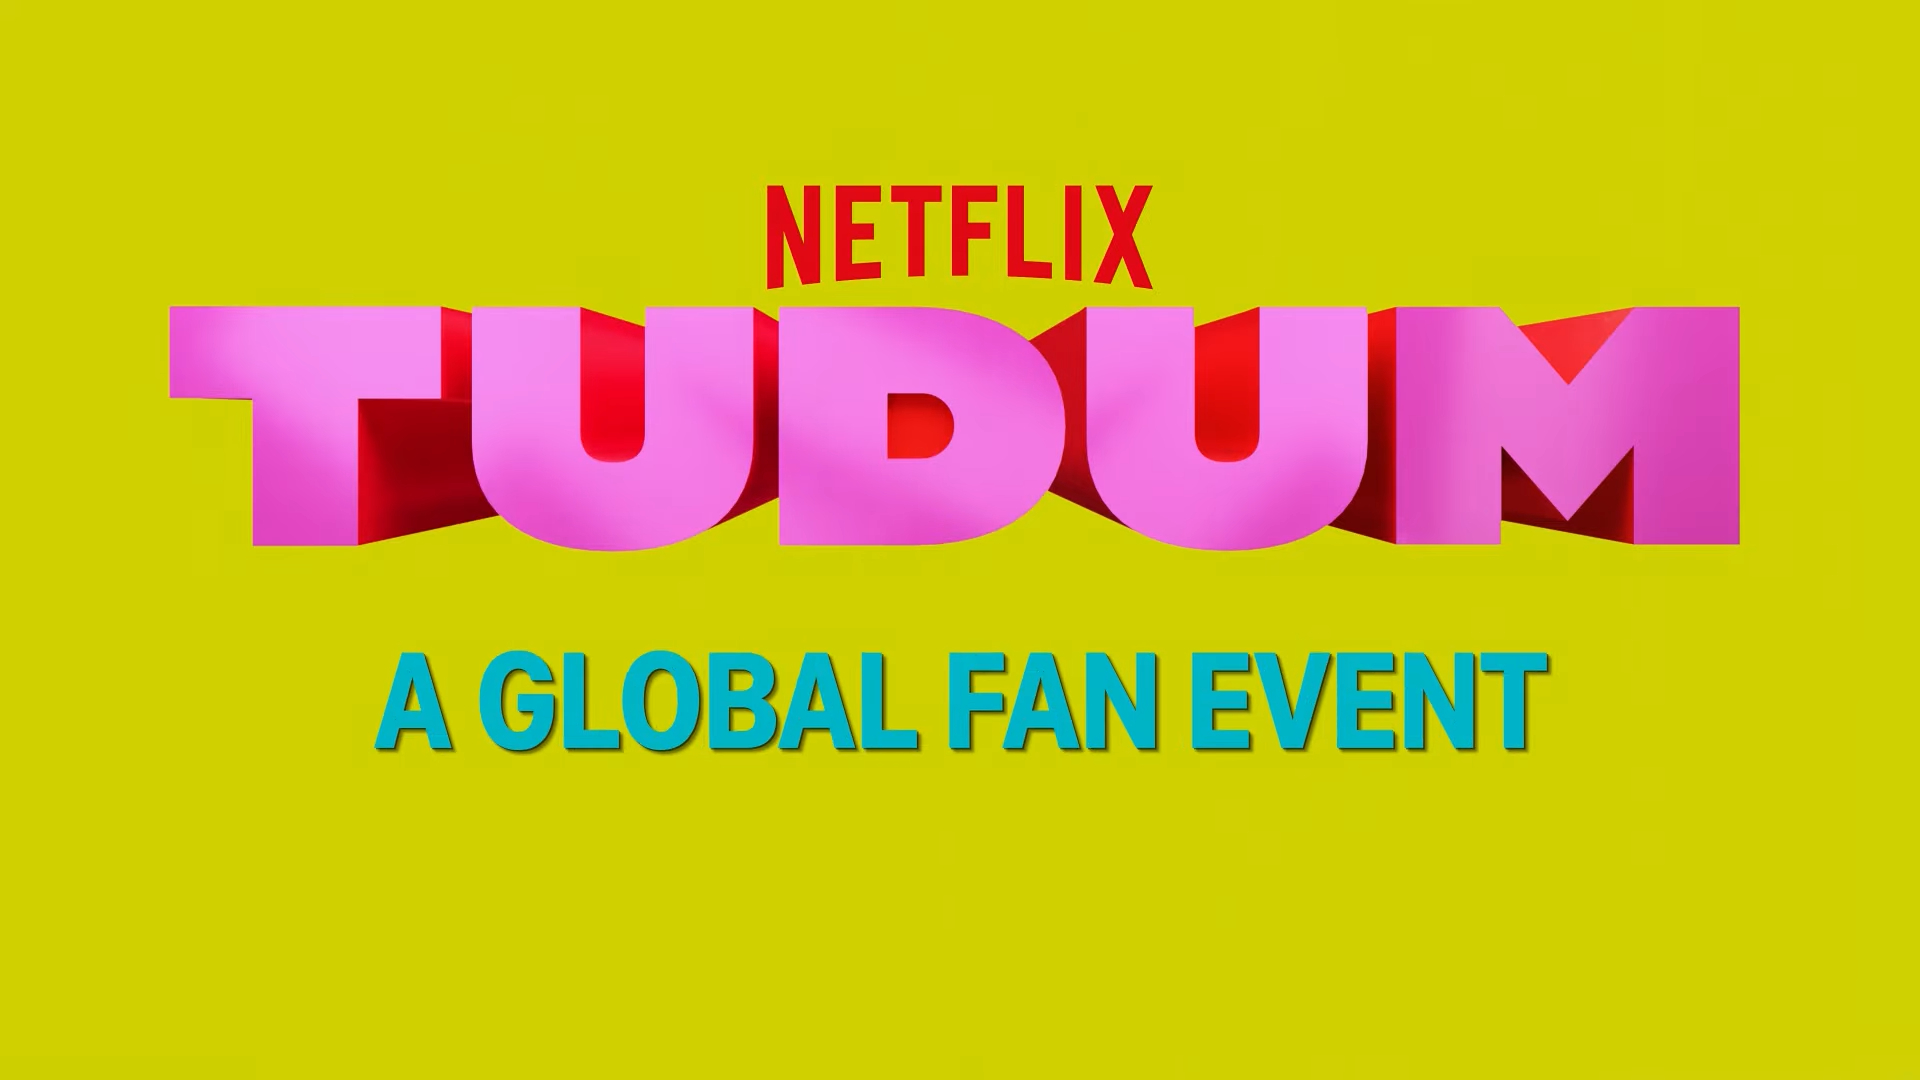 Netflix TUDUM Live Stream Event Returns Later This Month